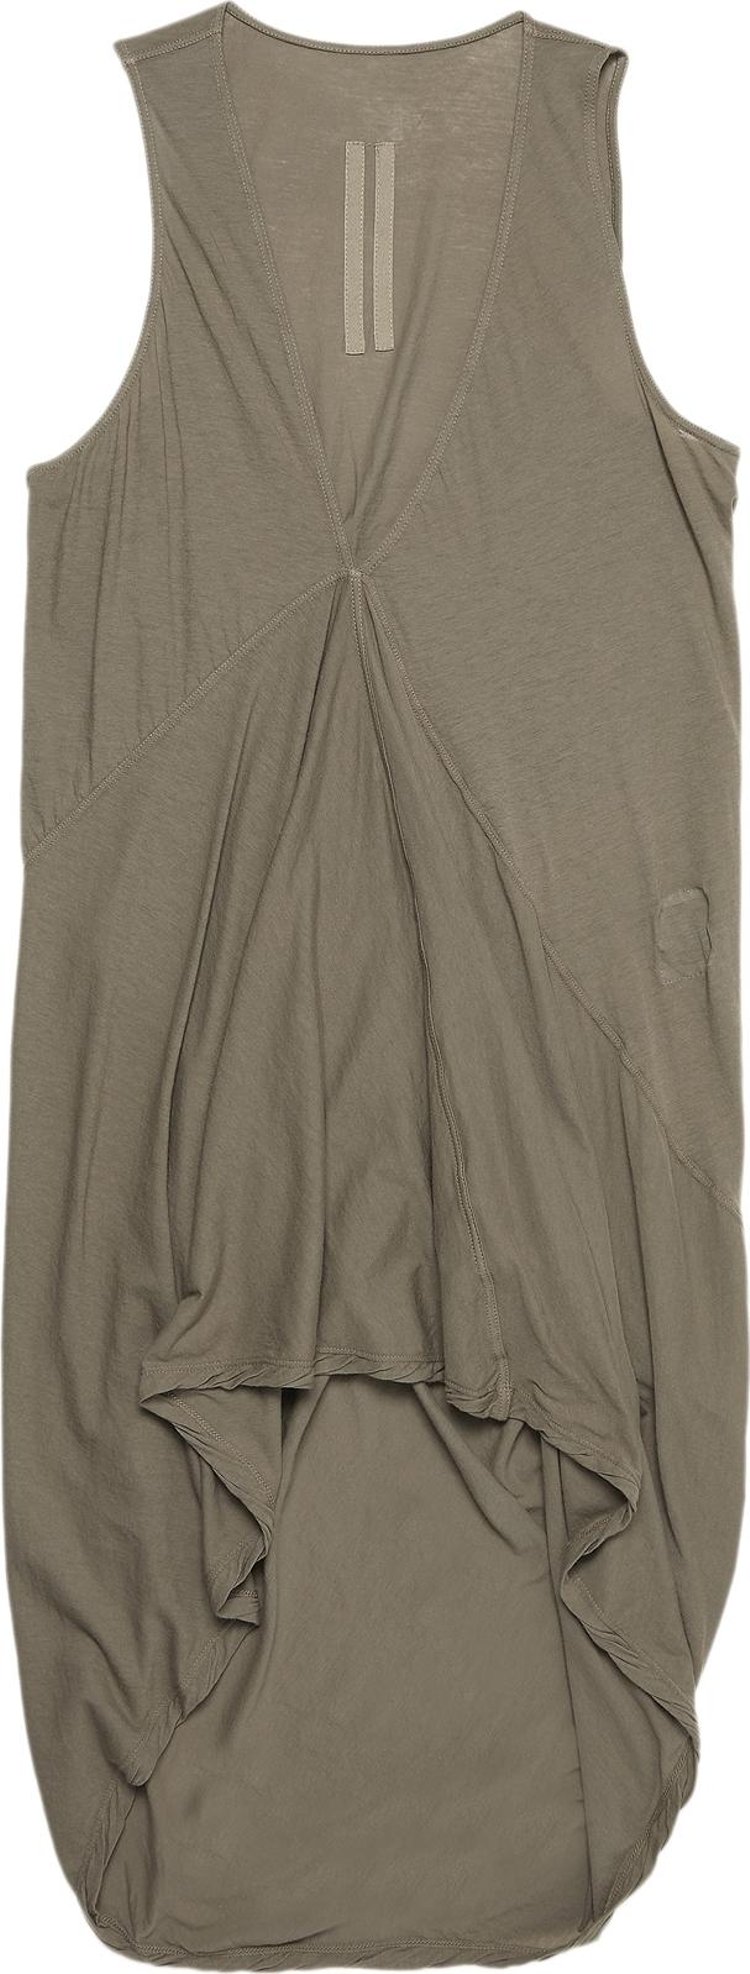 Buy Rick Owens DRKSHDW Island Tank Knit Top 'Dust' - DS01B7112 B 34 | GOAT